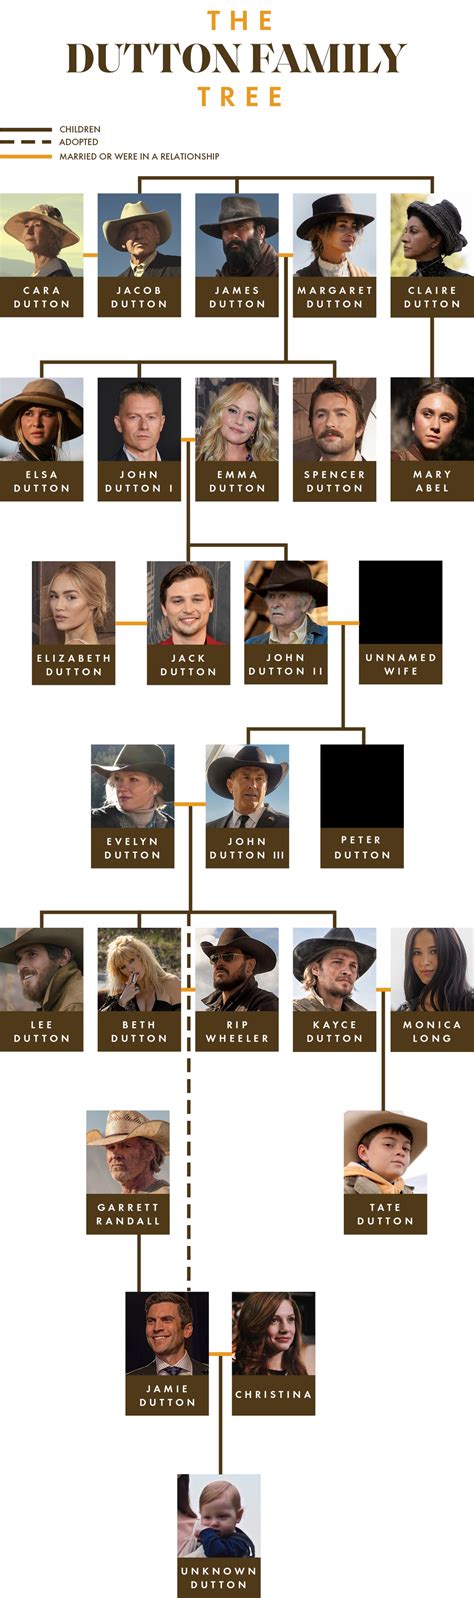 yellowstone timeline family tree